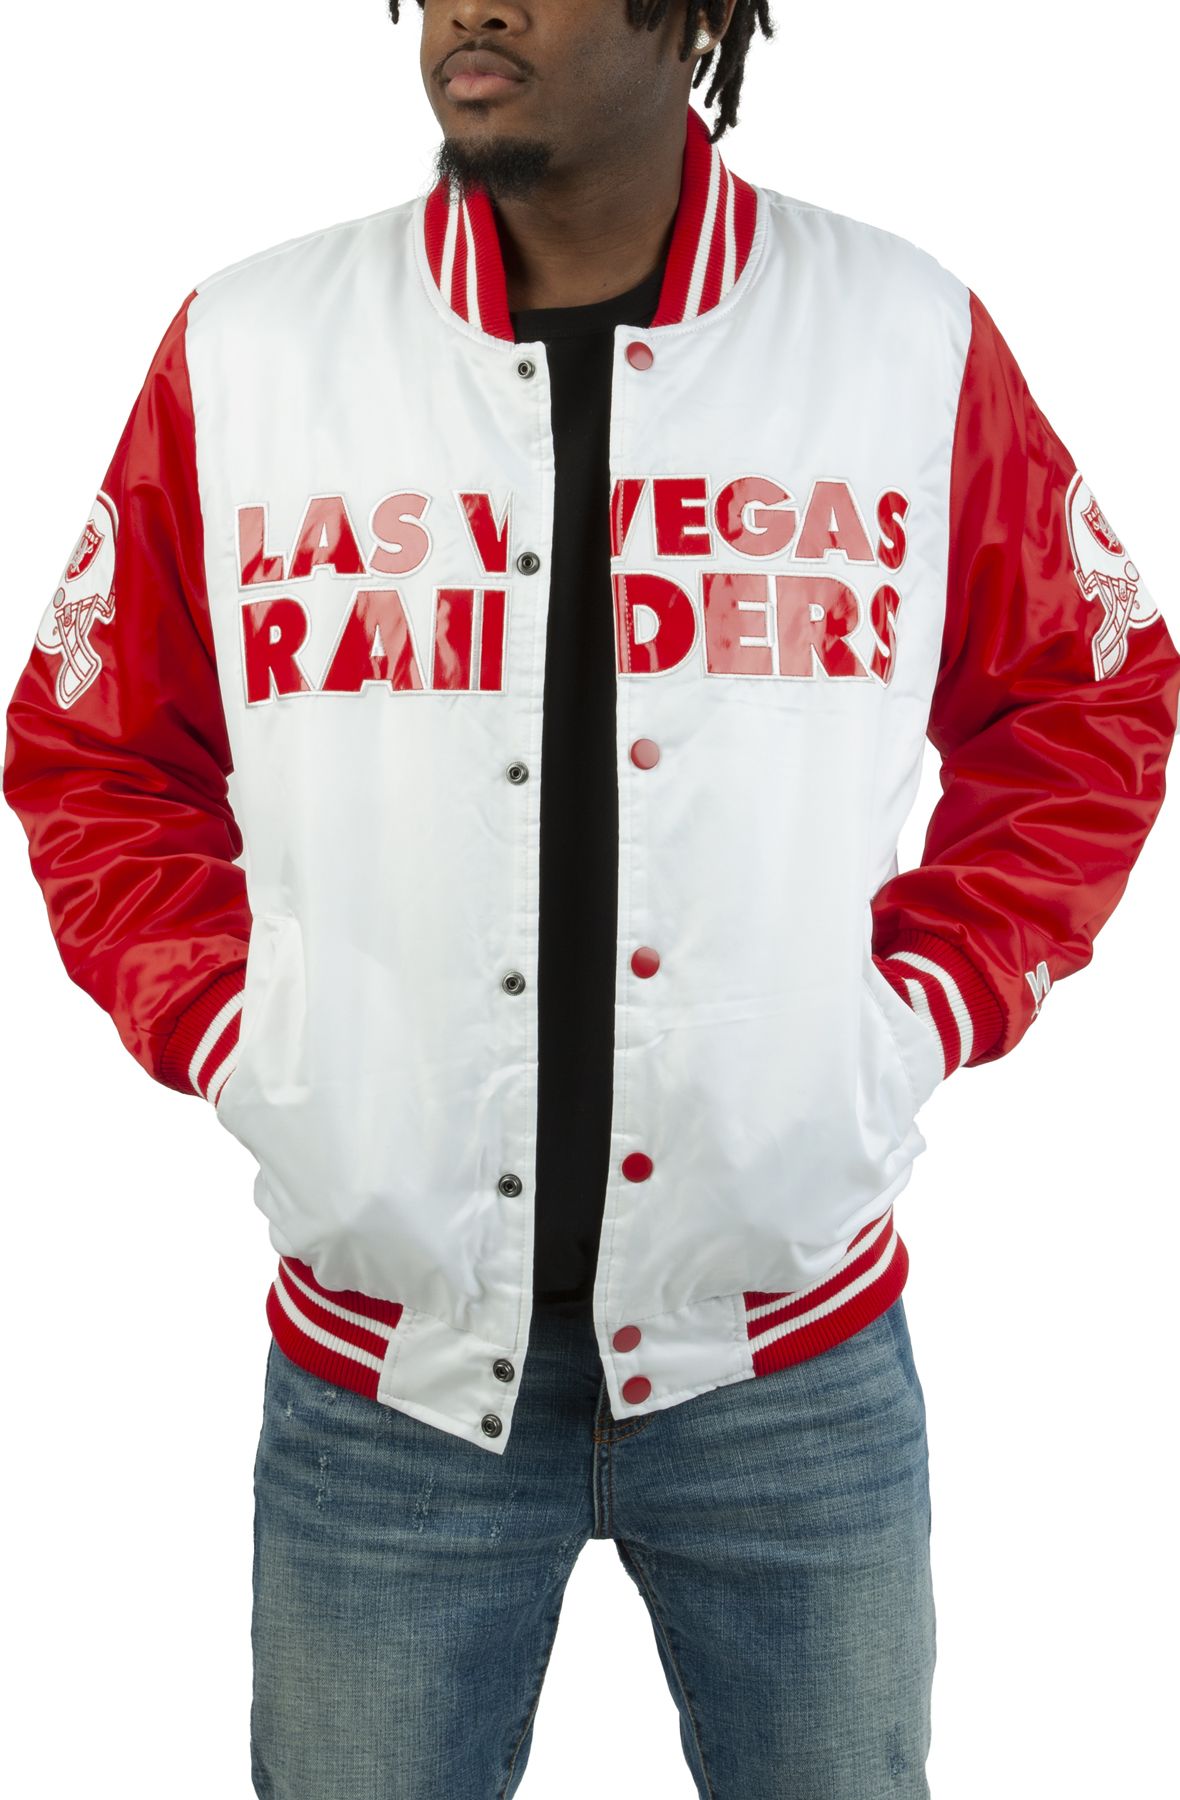 Buy a Starter Womens Las Vegas Raiders Jersey